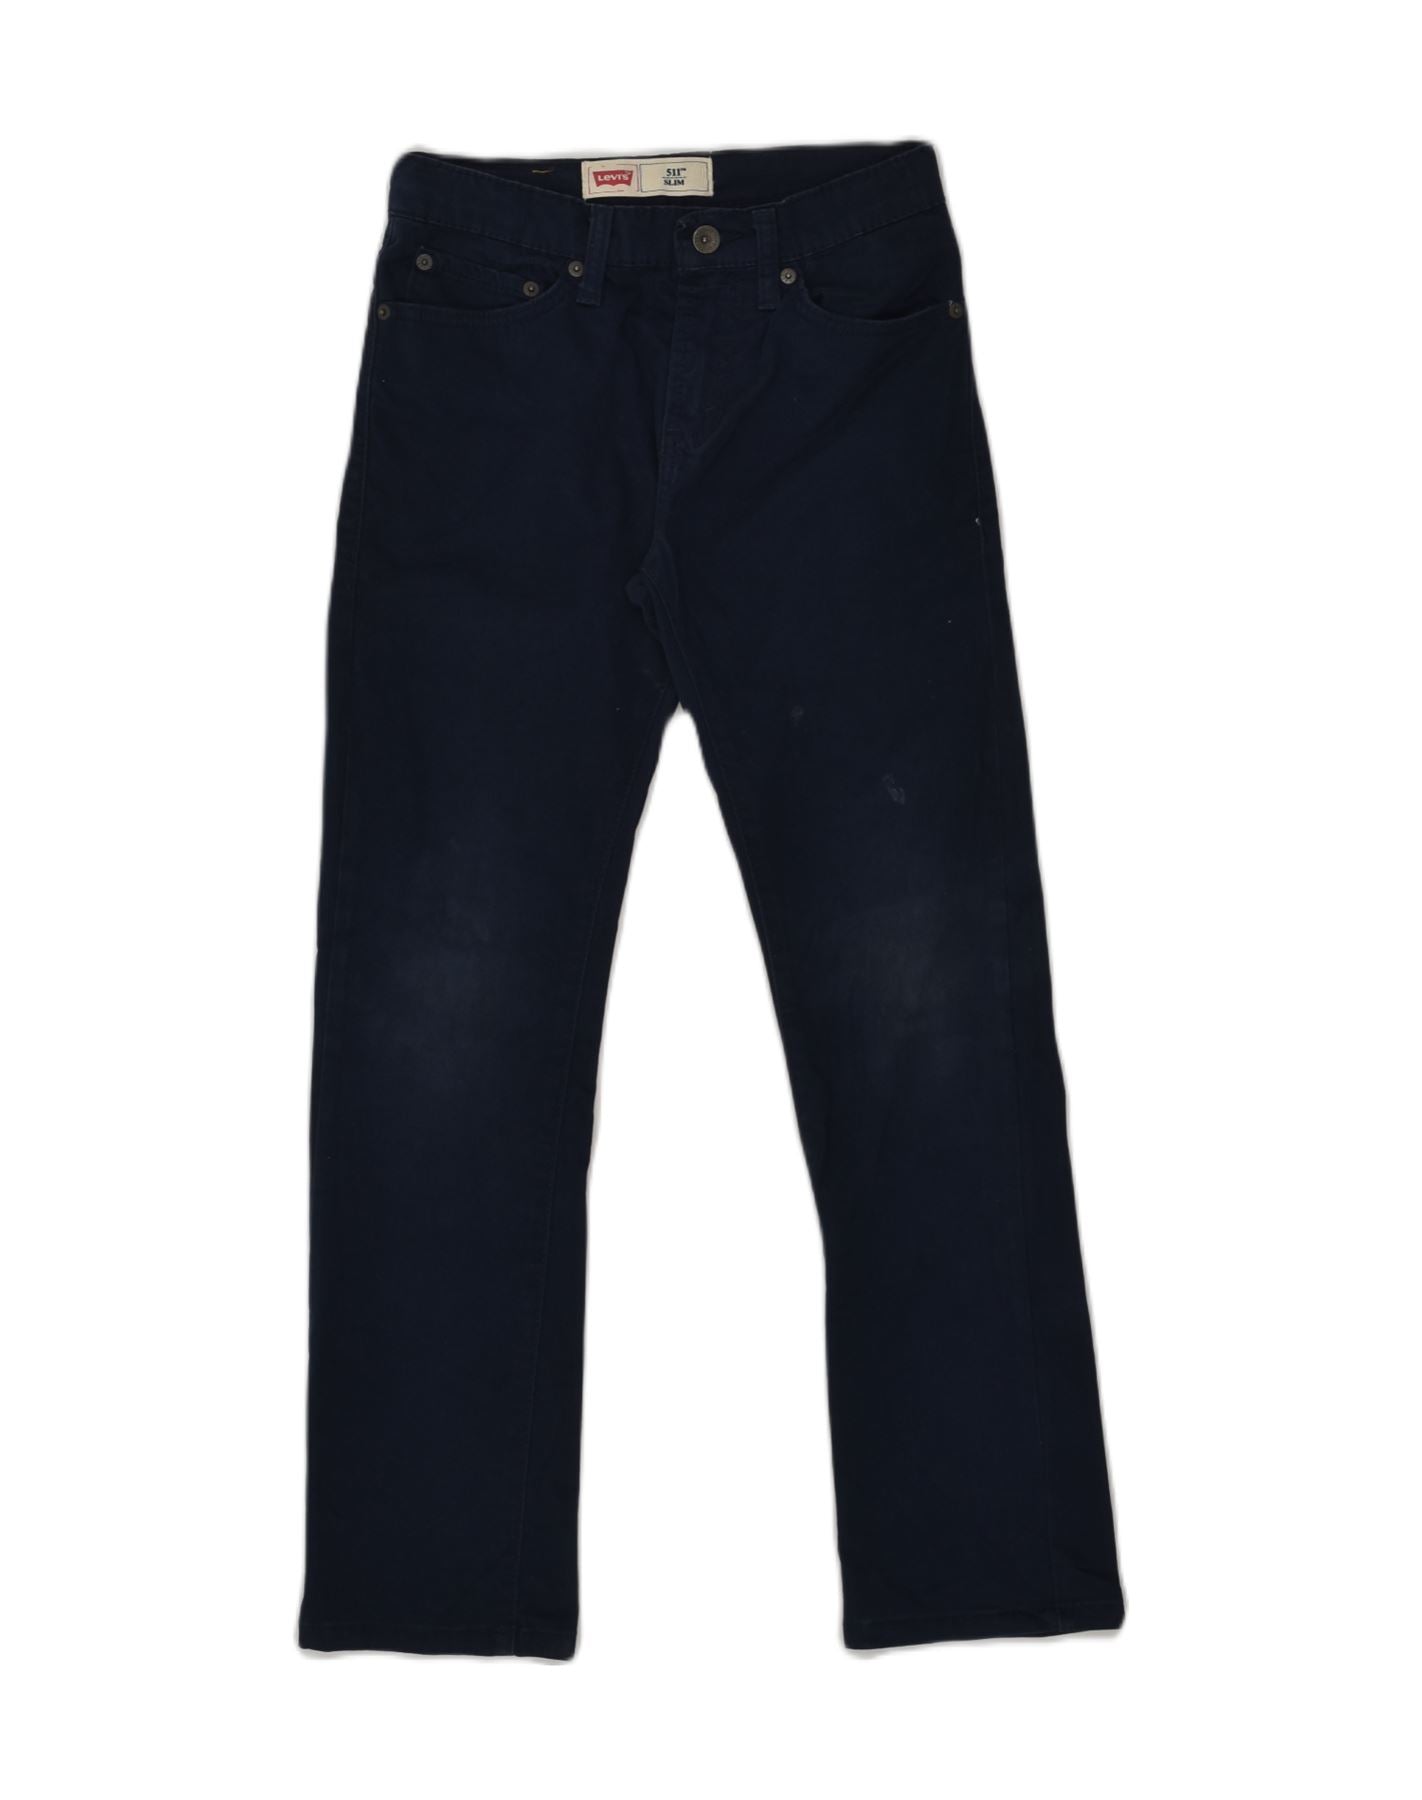 Buy Levi's 511 Black Slim Fit Trousers for Men Online @ Tata CLiQ